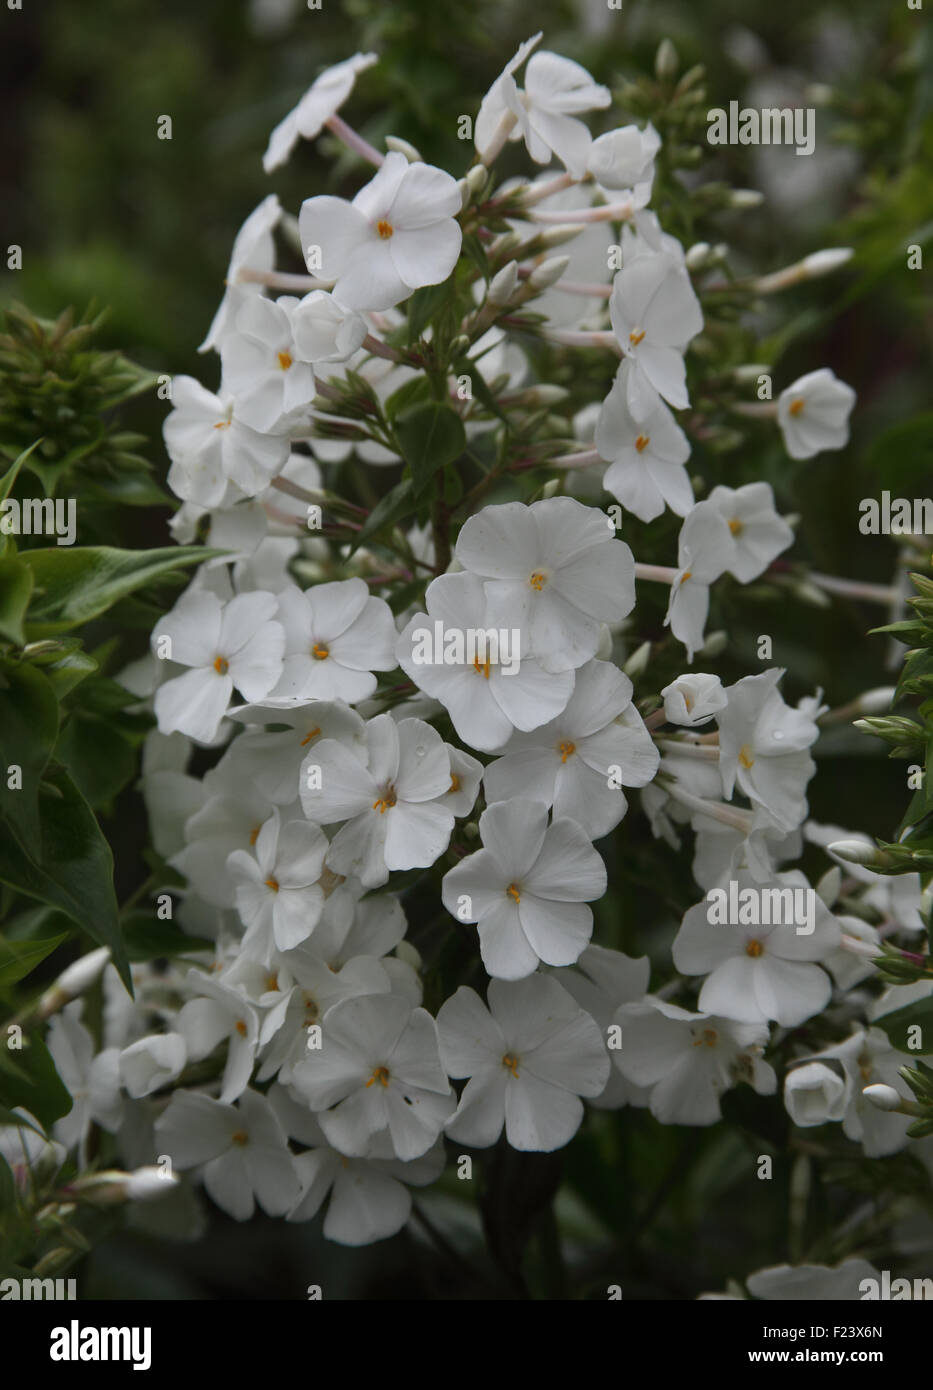 Phlox paniculata 'David' close up of flowers Stock Photo